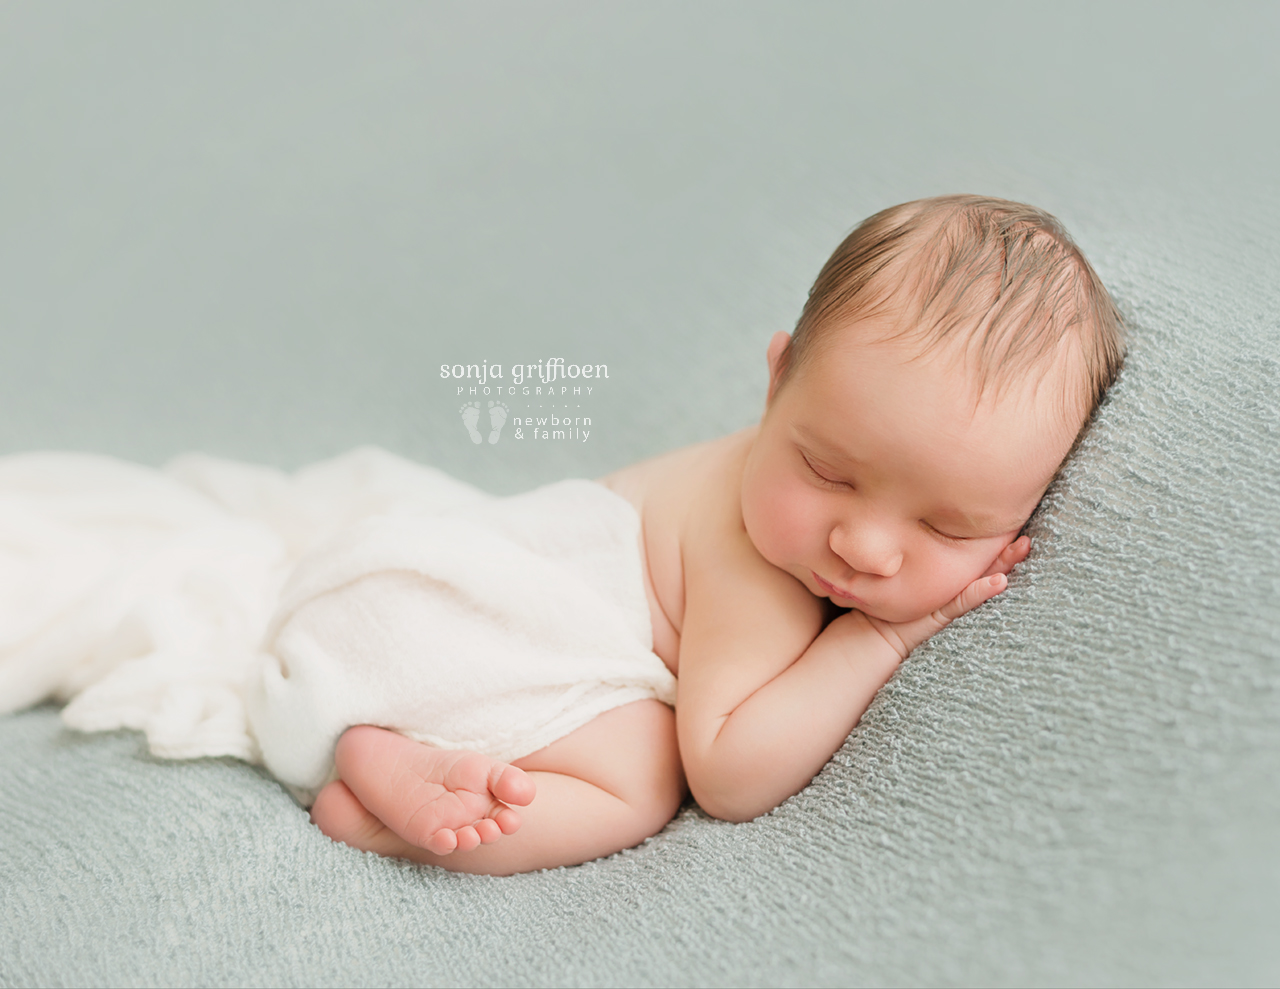 Oliver-Small-Newborn-Brisbane-Newborn-Photographer-Sonja-Griffioen-14.jpg